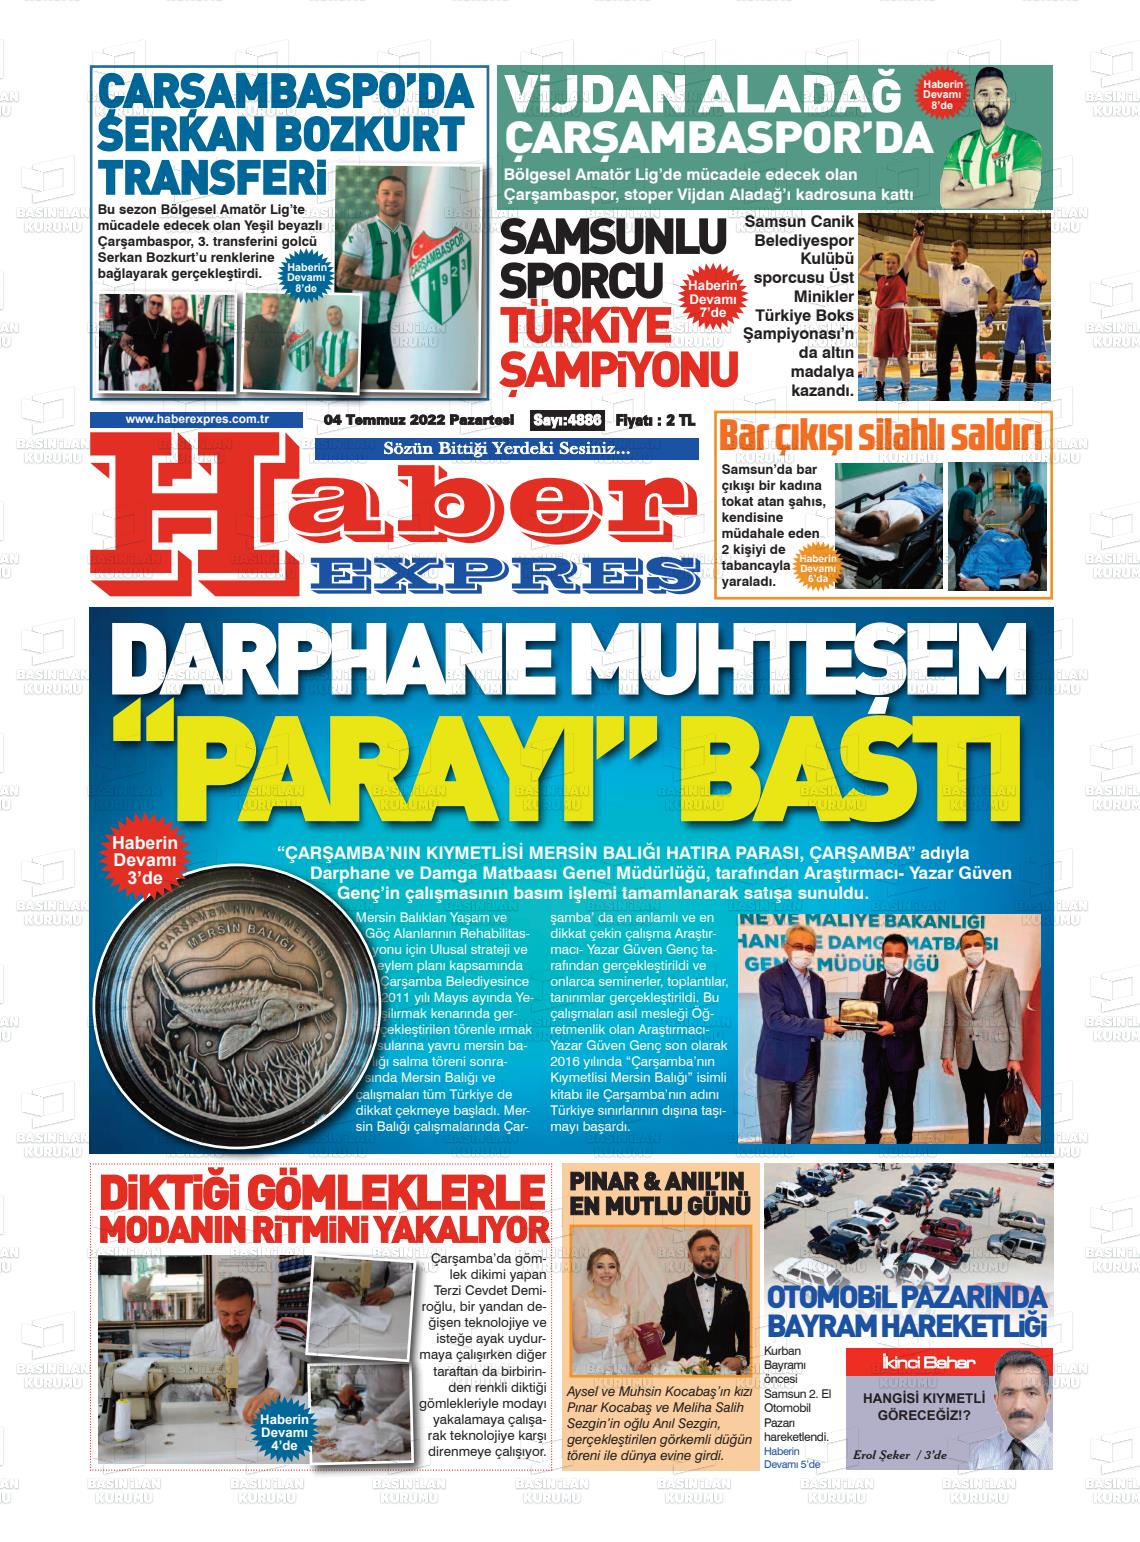 04 Temmuz 2022 Haber Expres Gazete Manşeti